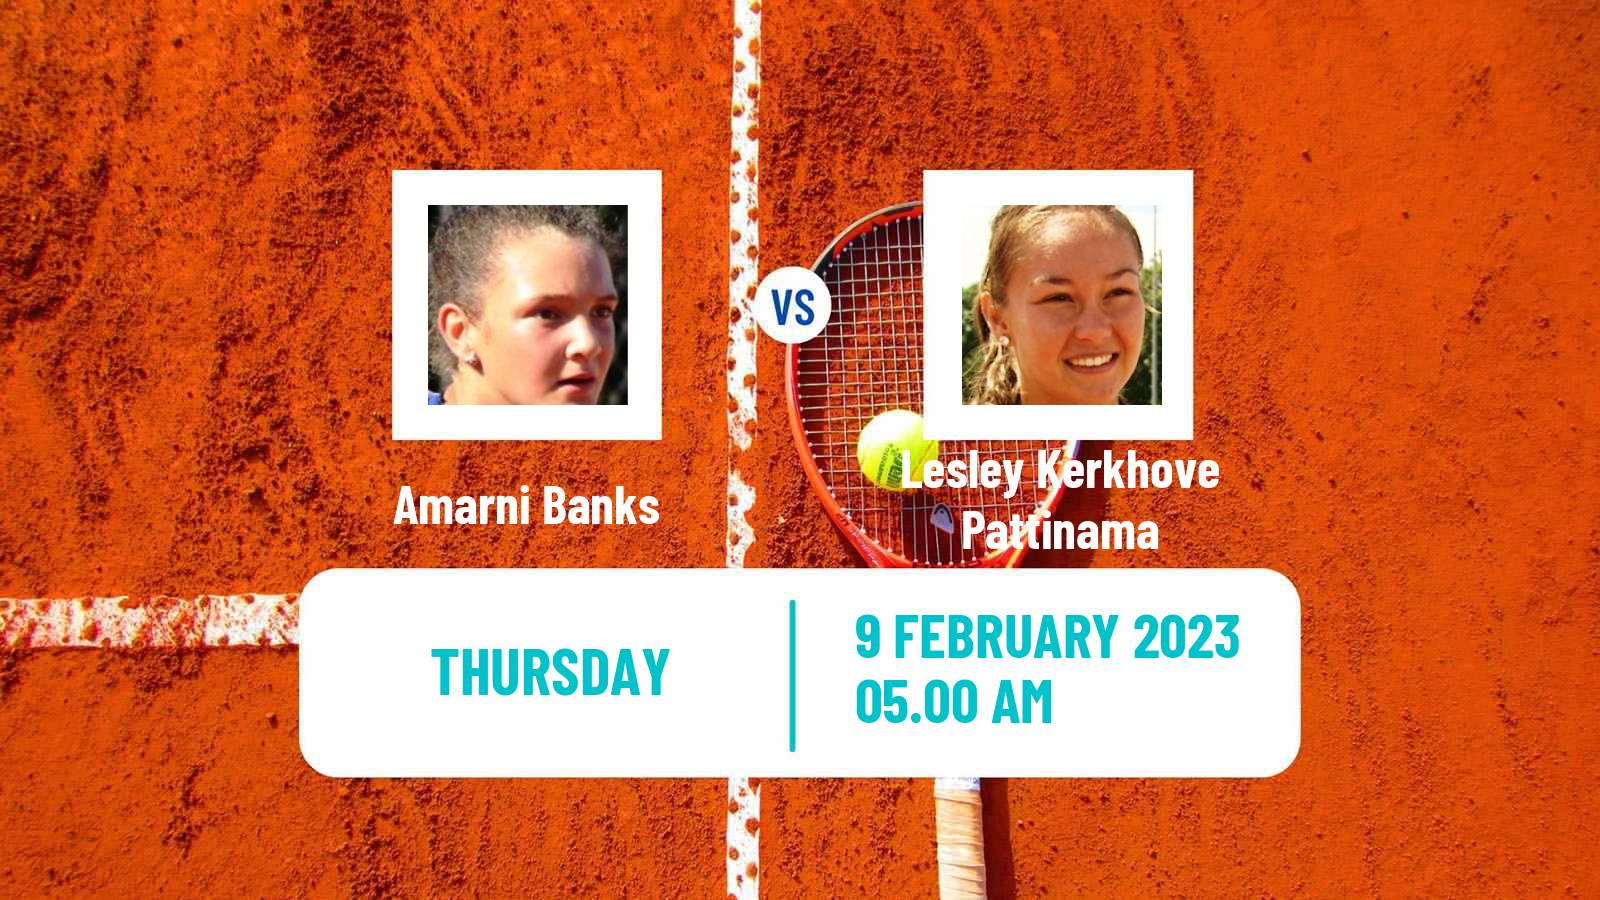 Tennis ITF Tournaments Amarni Banks - Lesley Kerkhove Pattinama